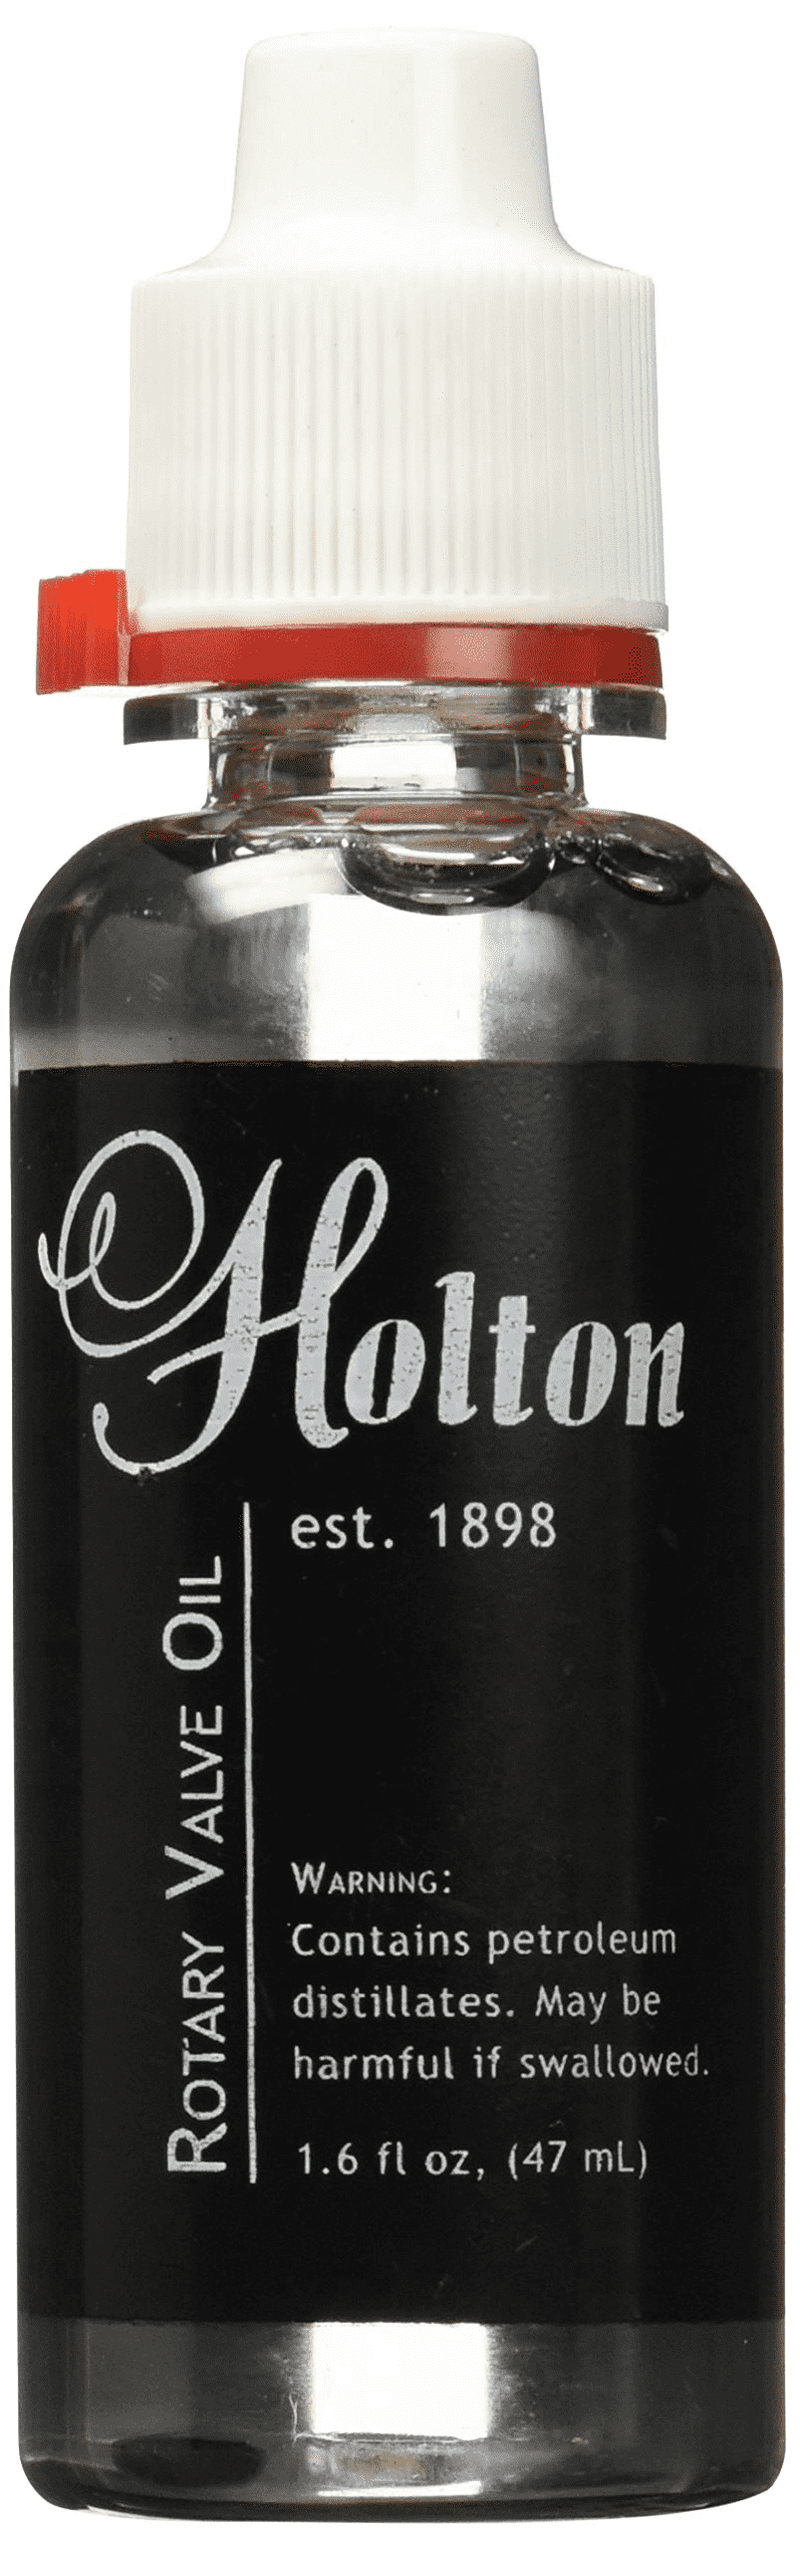 Holton Rotary Valves Oil